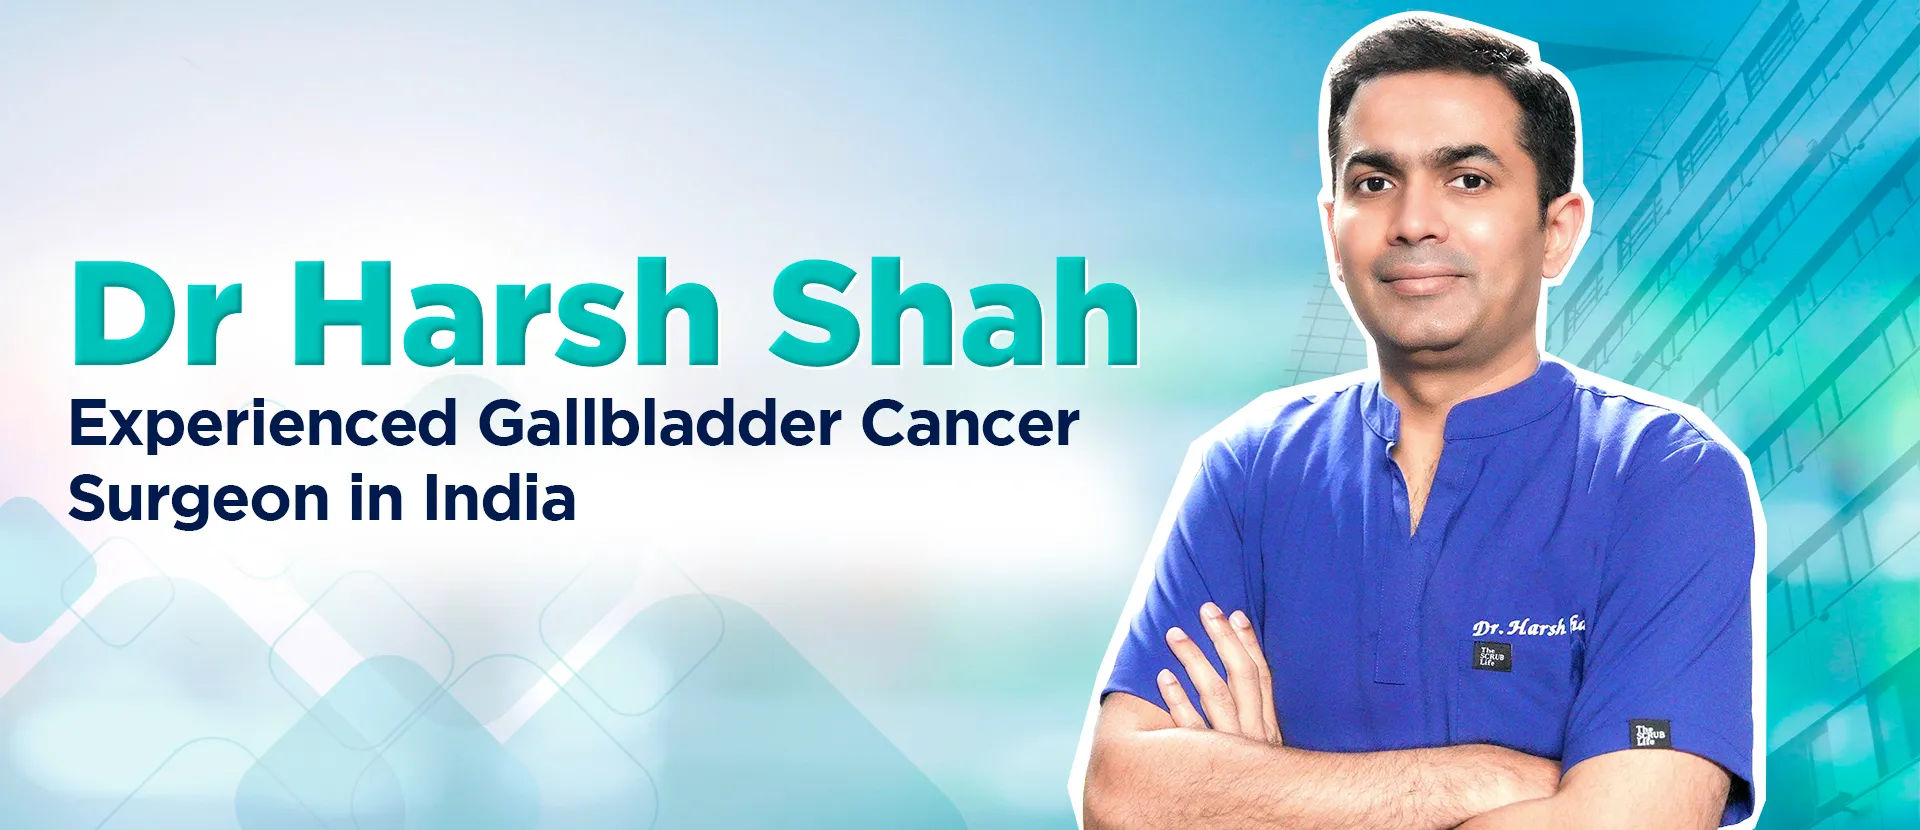 BEst gallbladder cancer surgeon and gallbladder cancer hospital in Ahmedabad